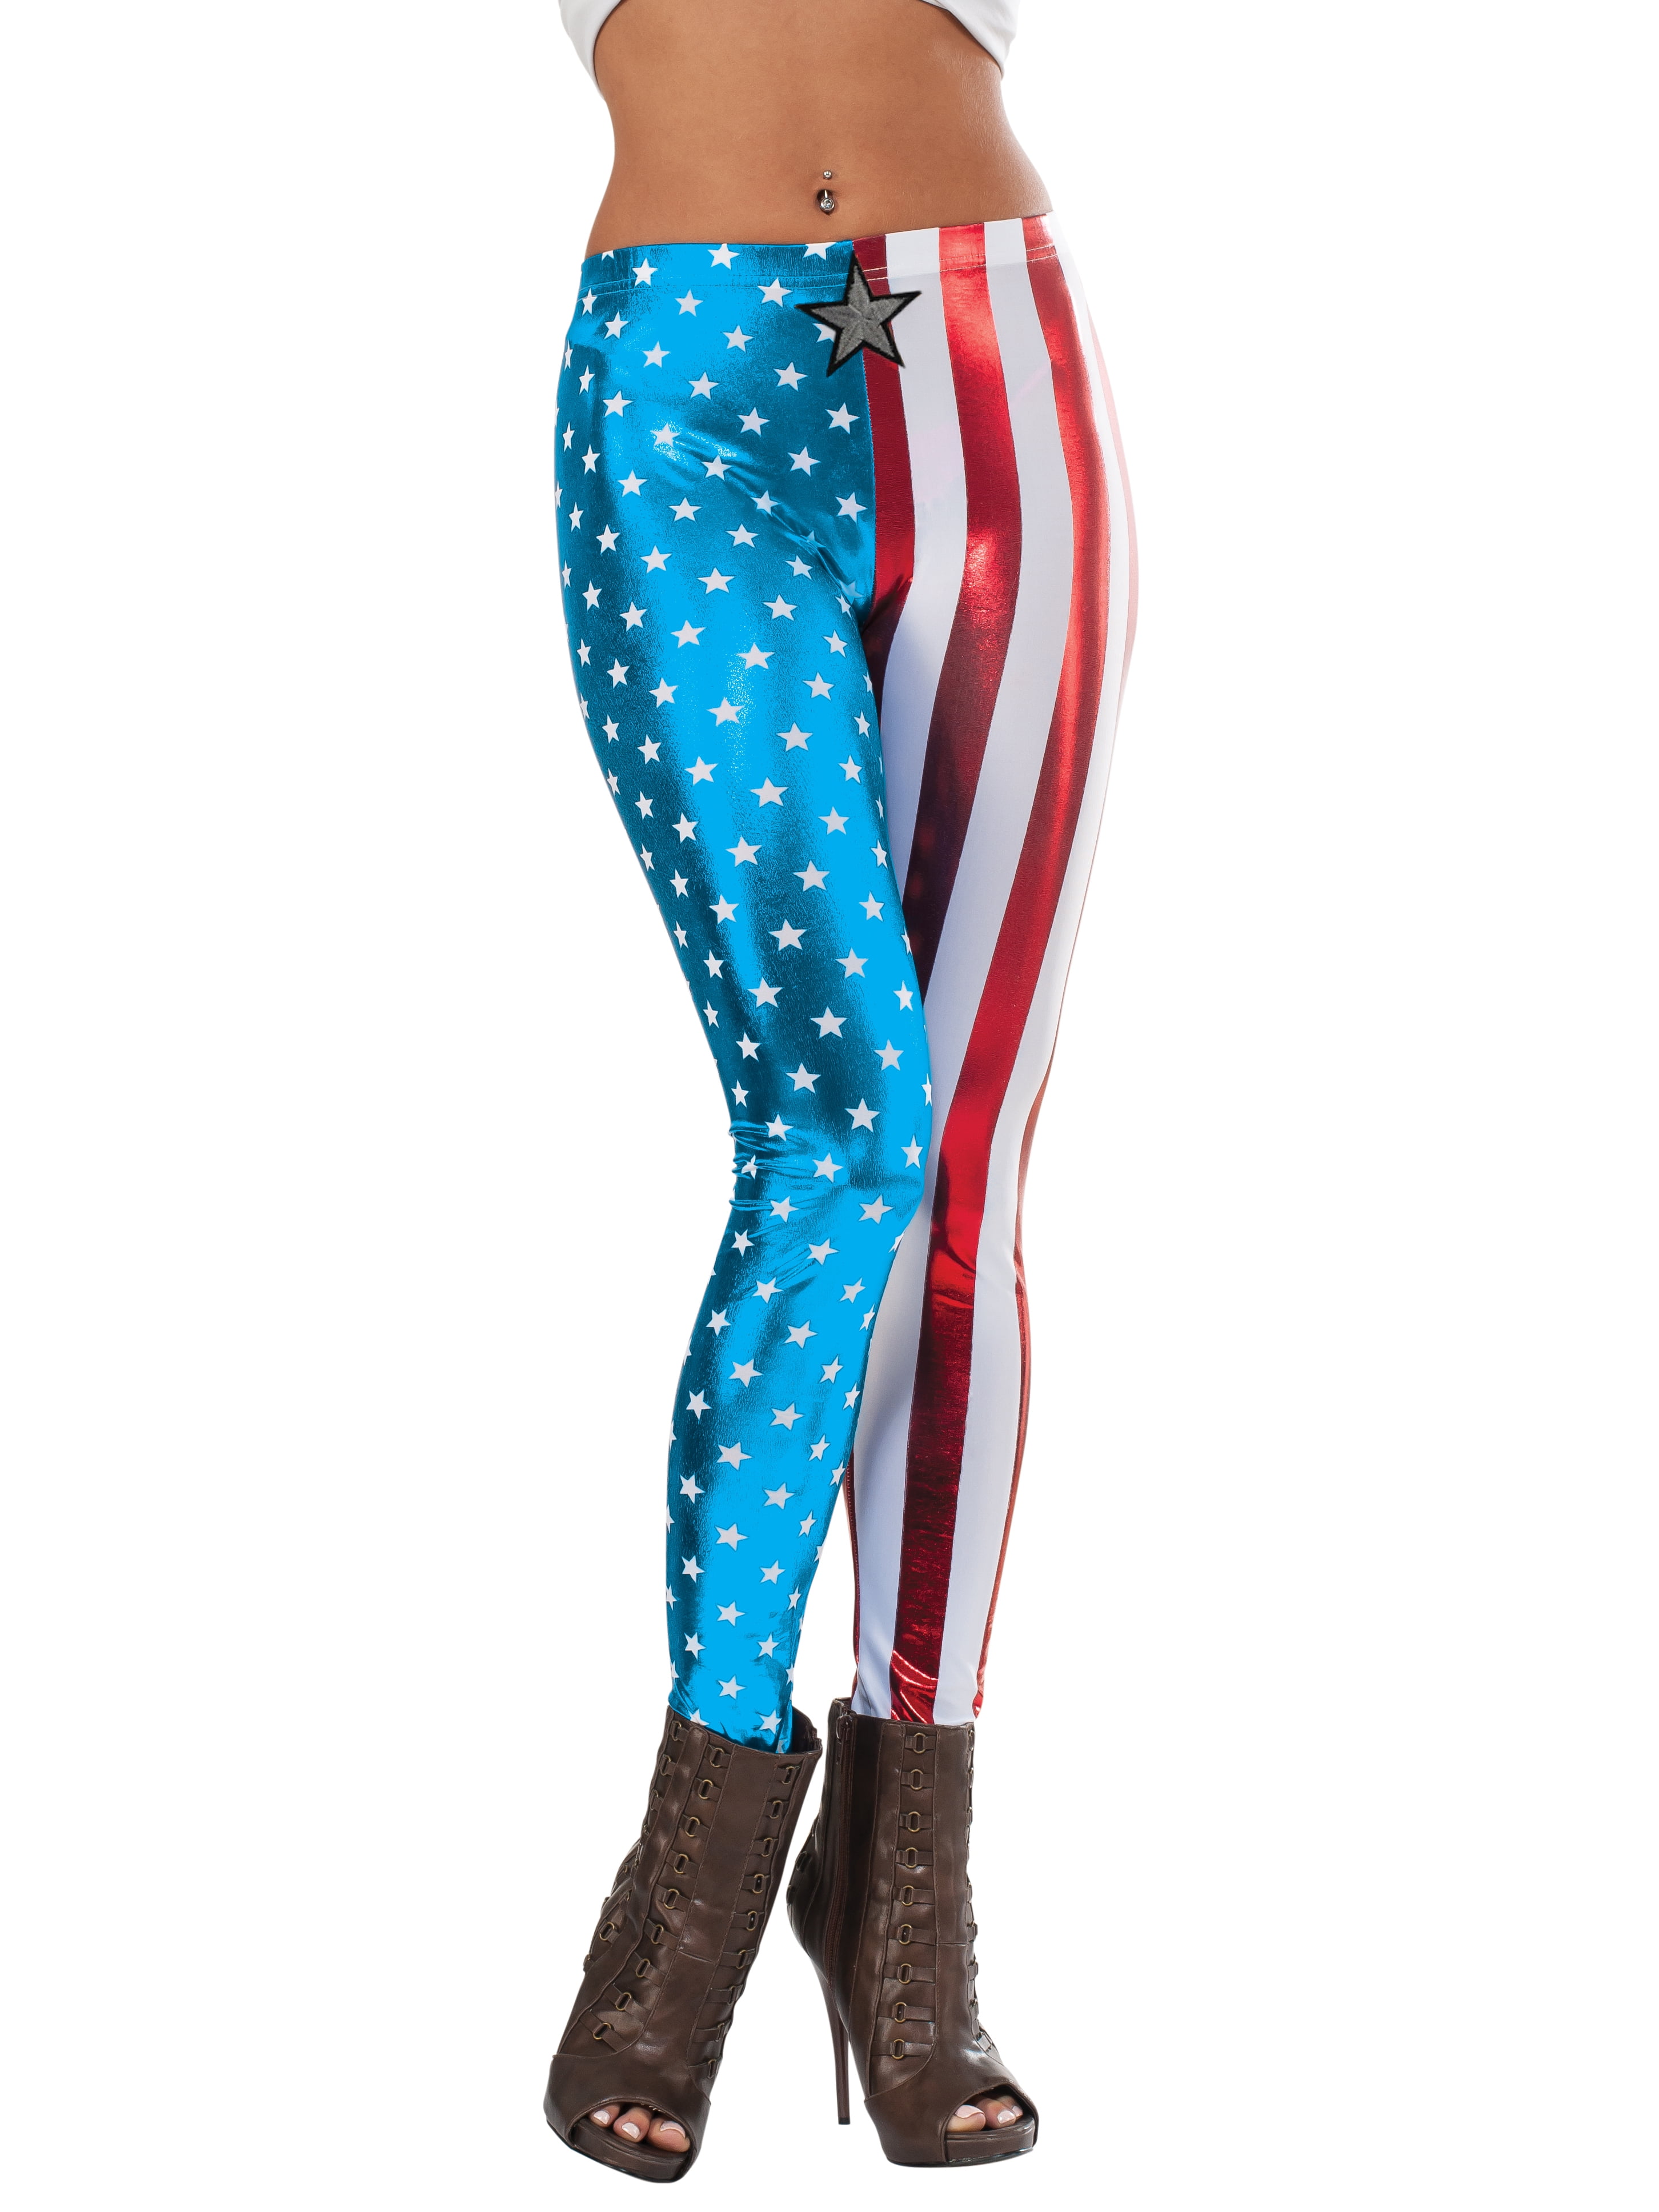 Captain America Workout Legging Pant | Marvel clothes, Leggings are not  pants, Captain america workout